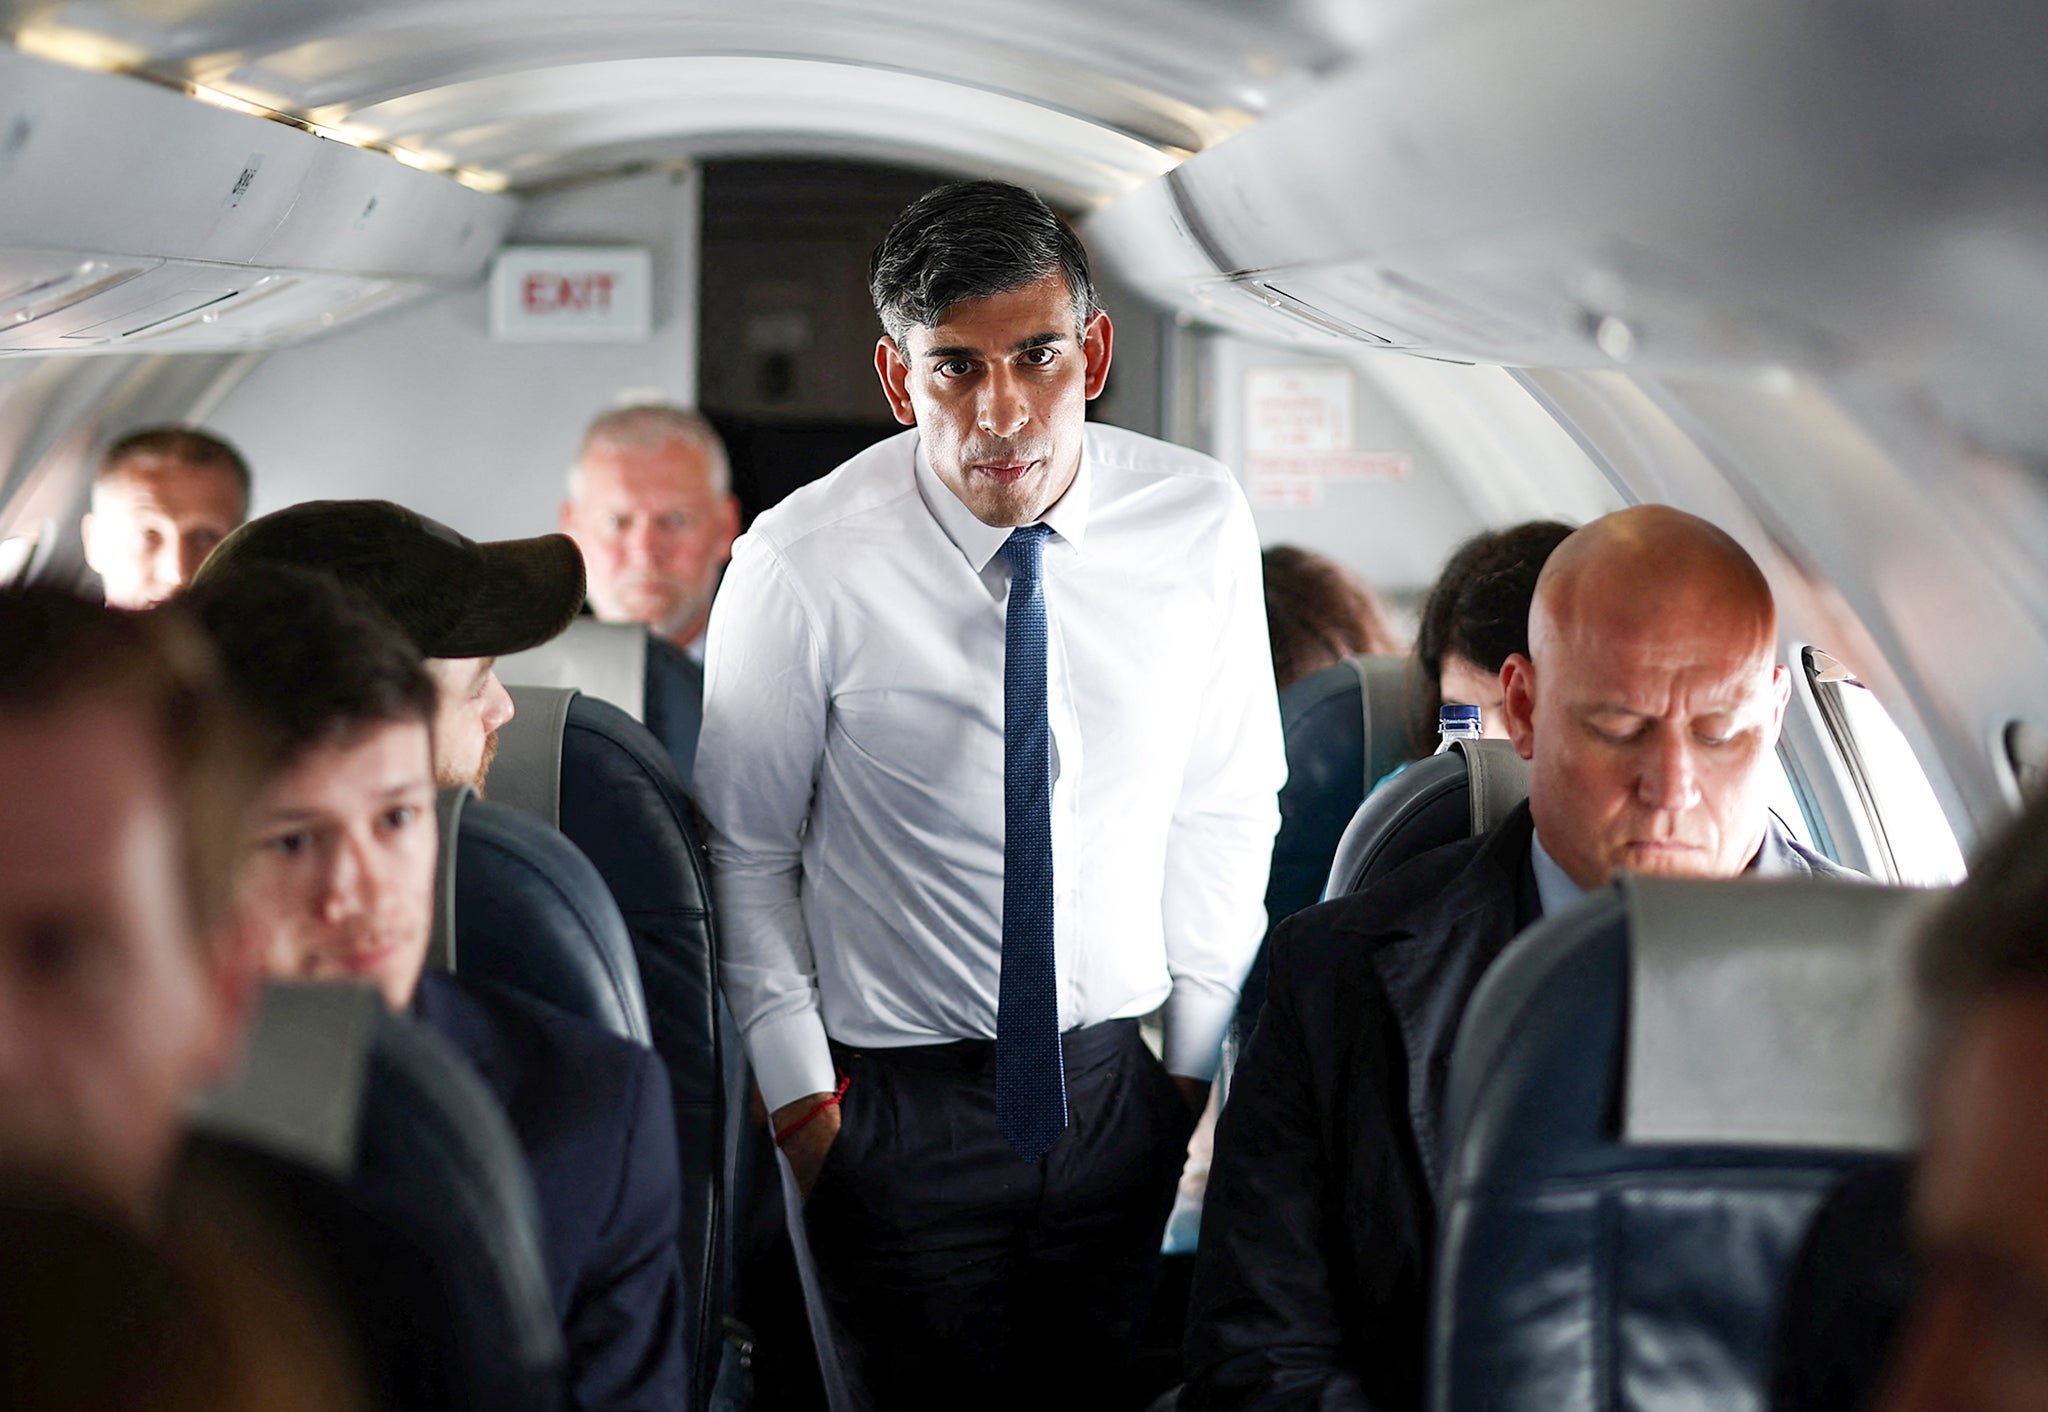 Sunak walks towards journalists on the plane